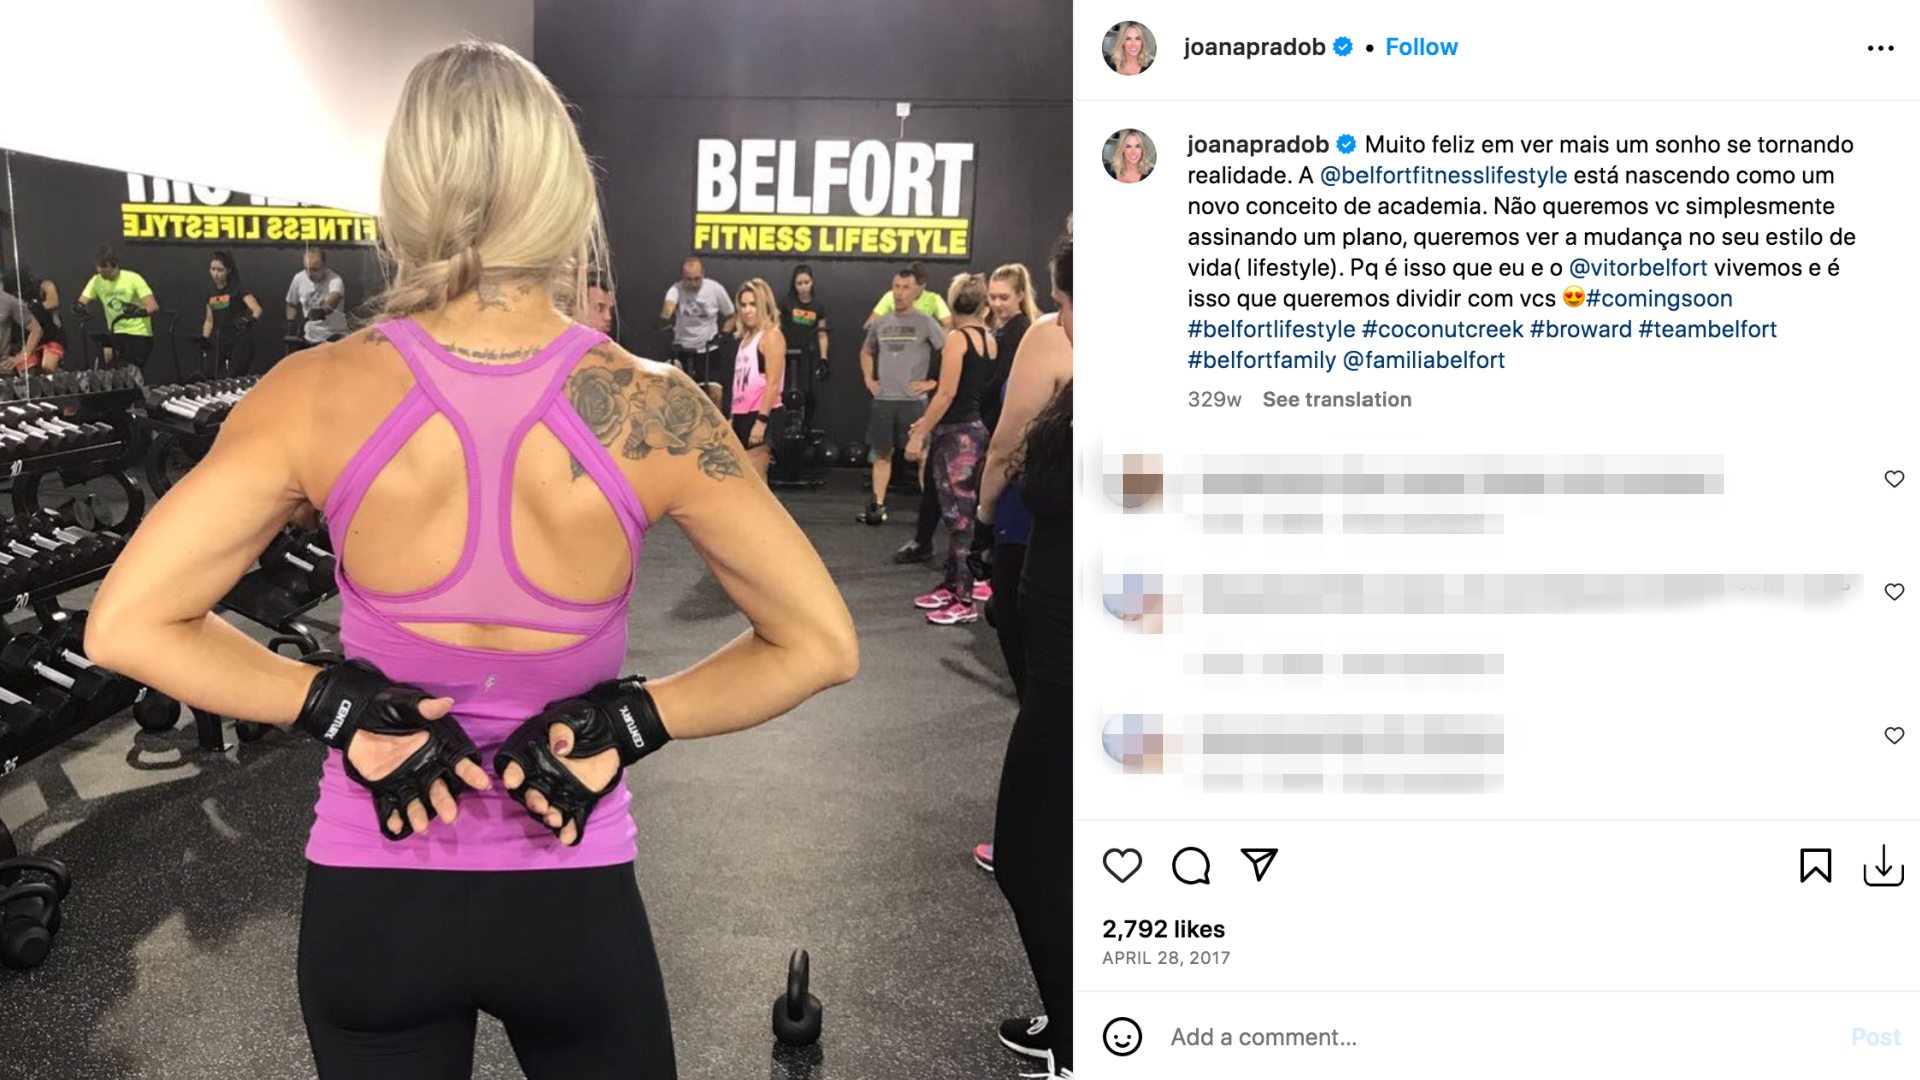 Belfort Fitness Lifestyle